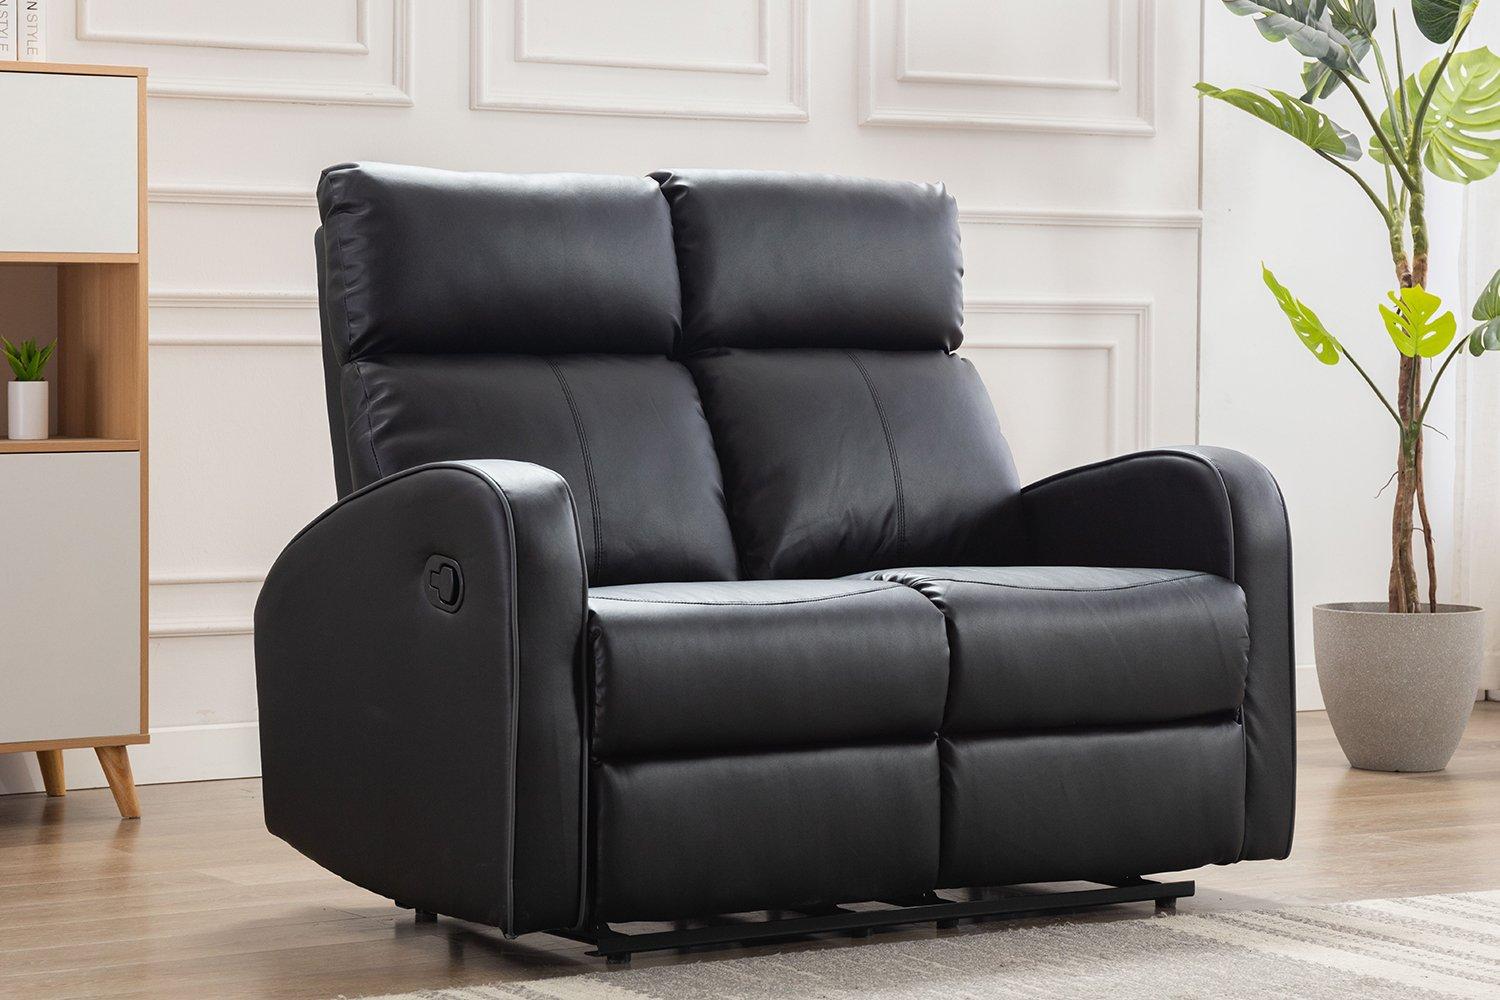 Boston Leather 2 Seater Recliner Sofa